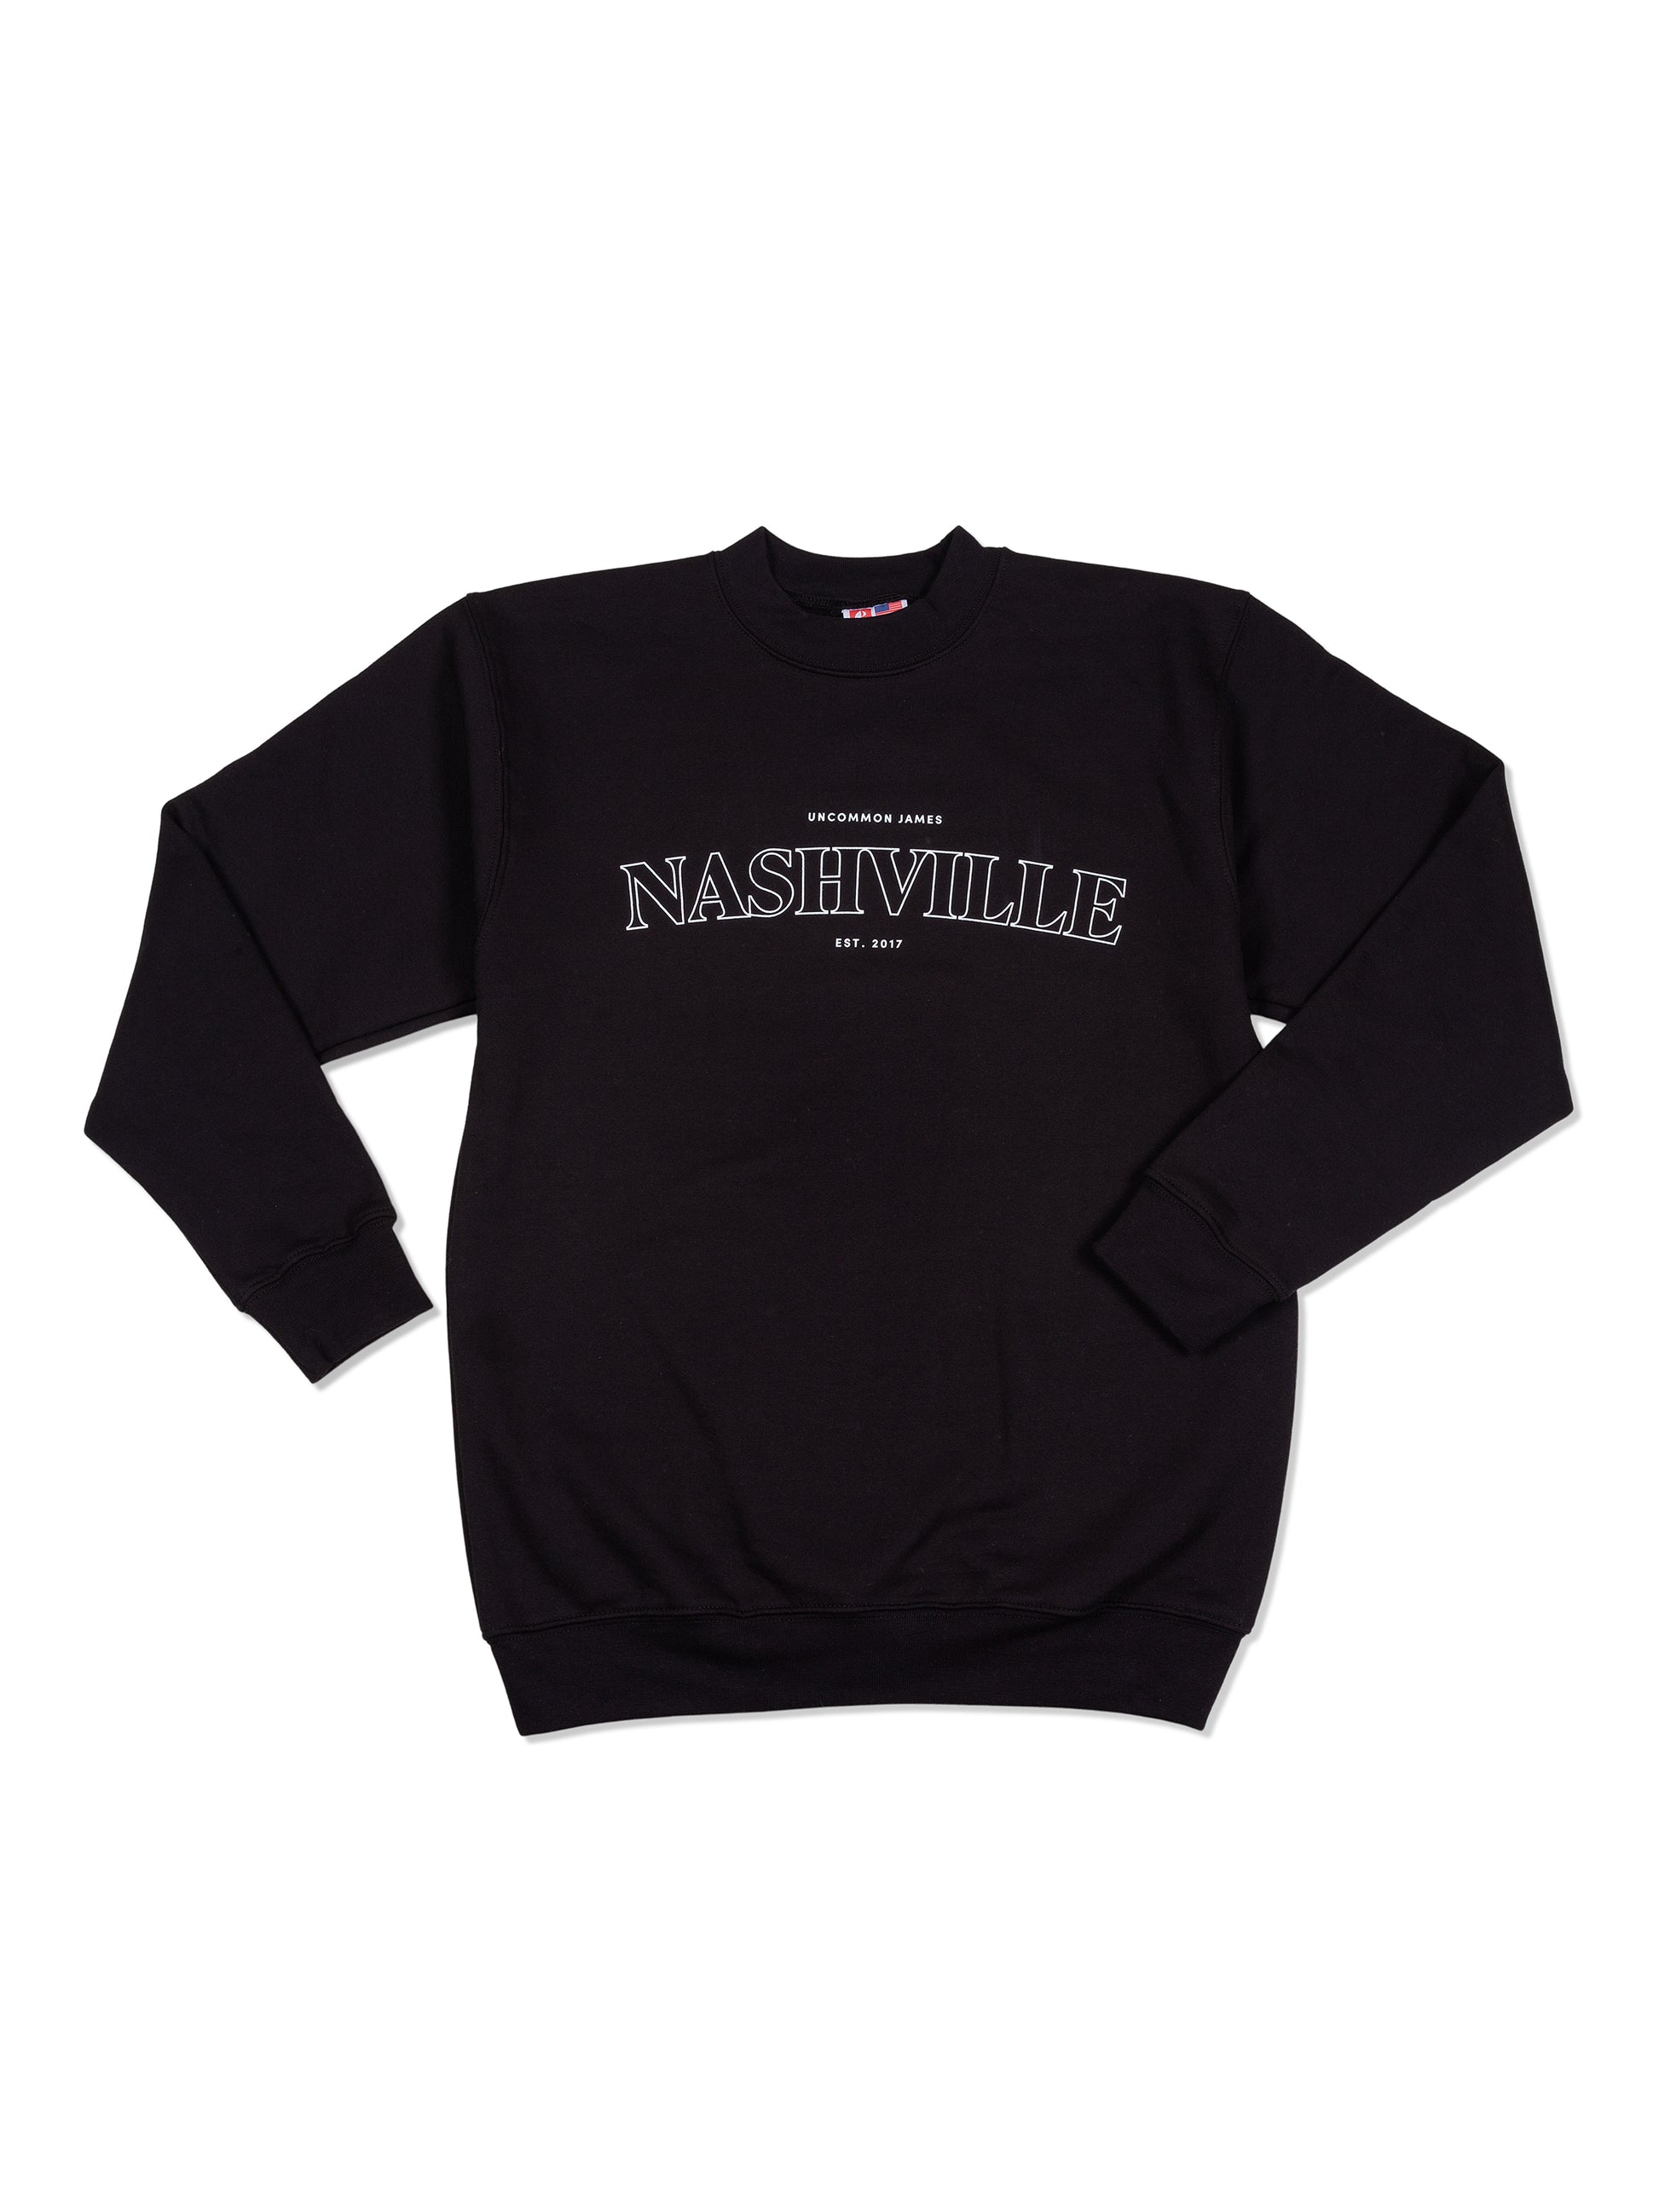 Nashville Sweatshirt | Black | Product Image | Uncommon James